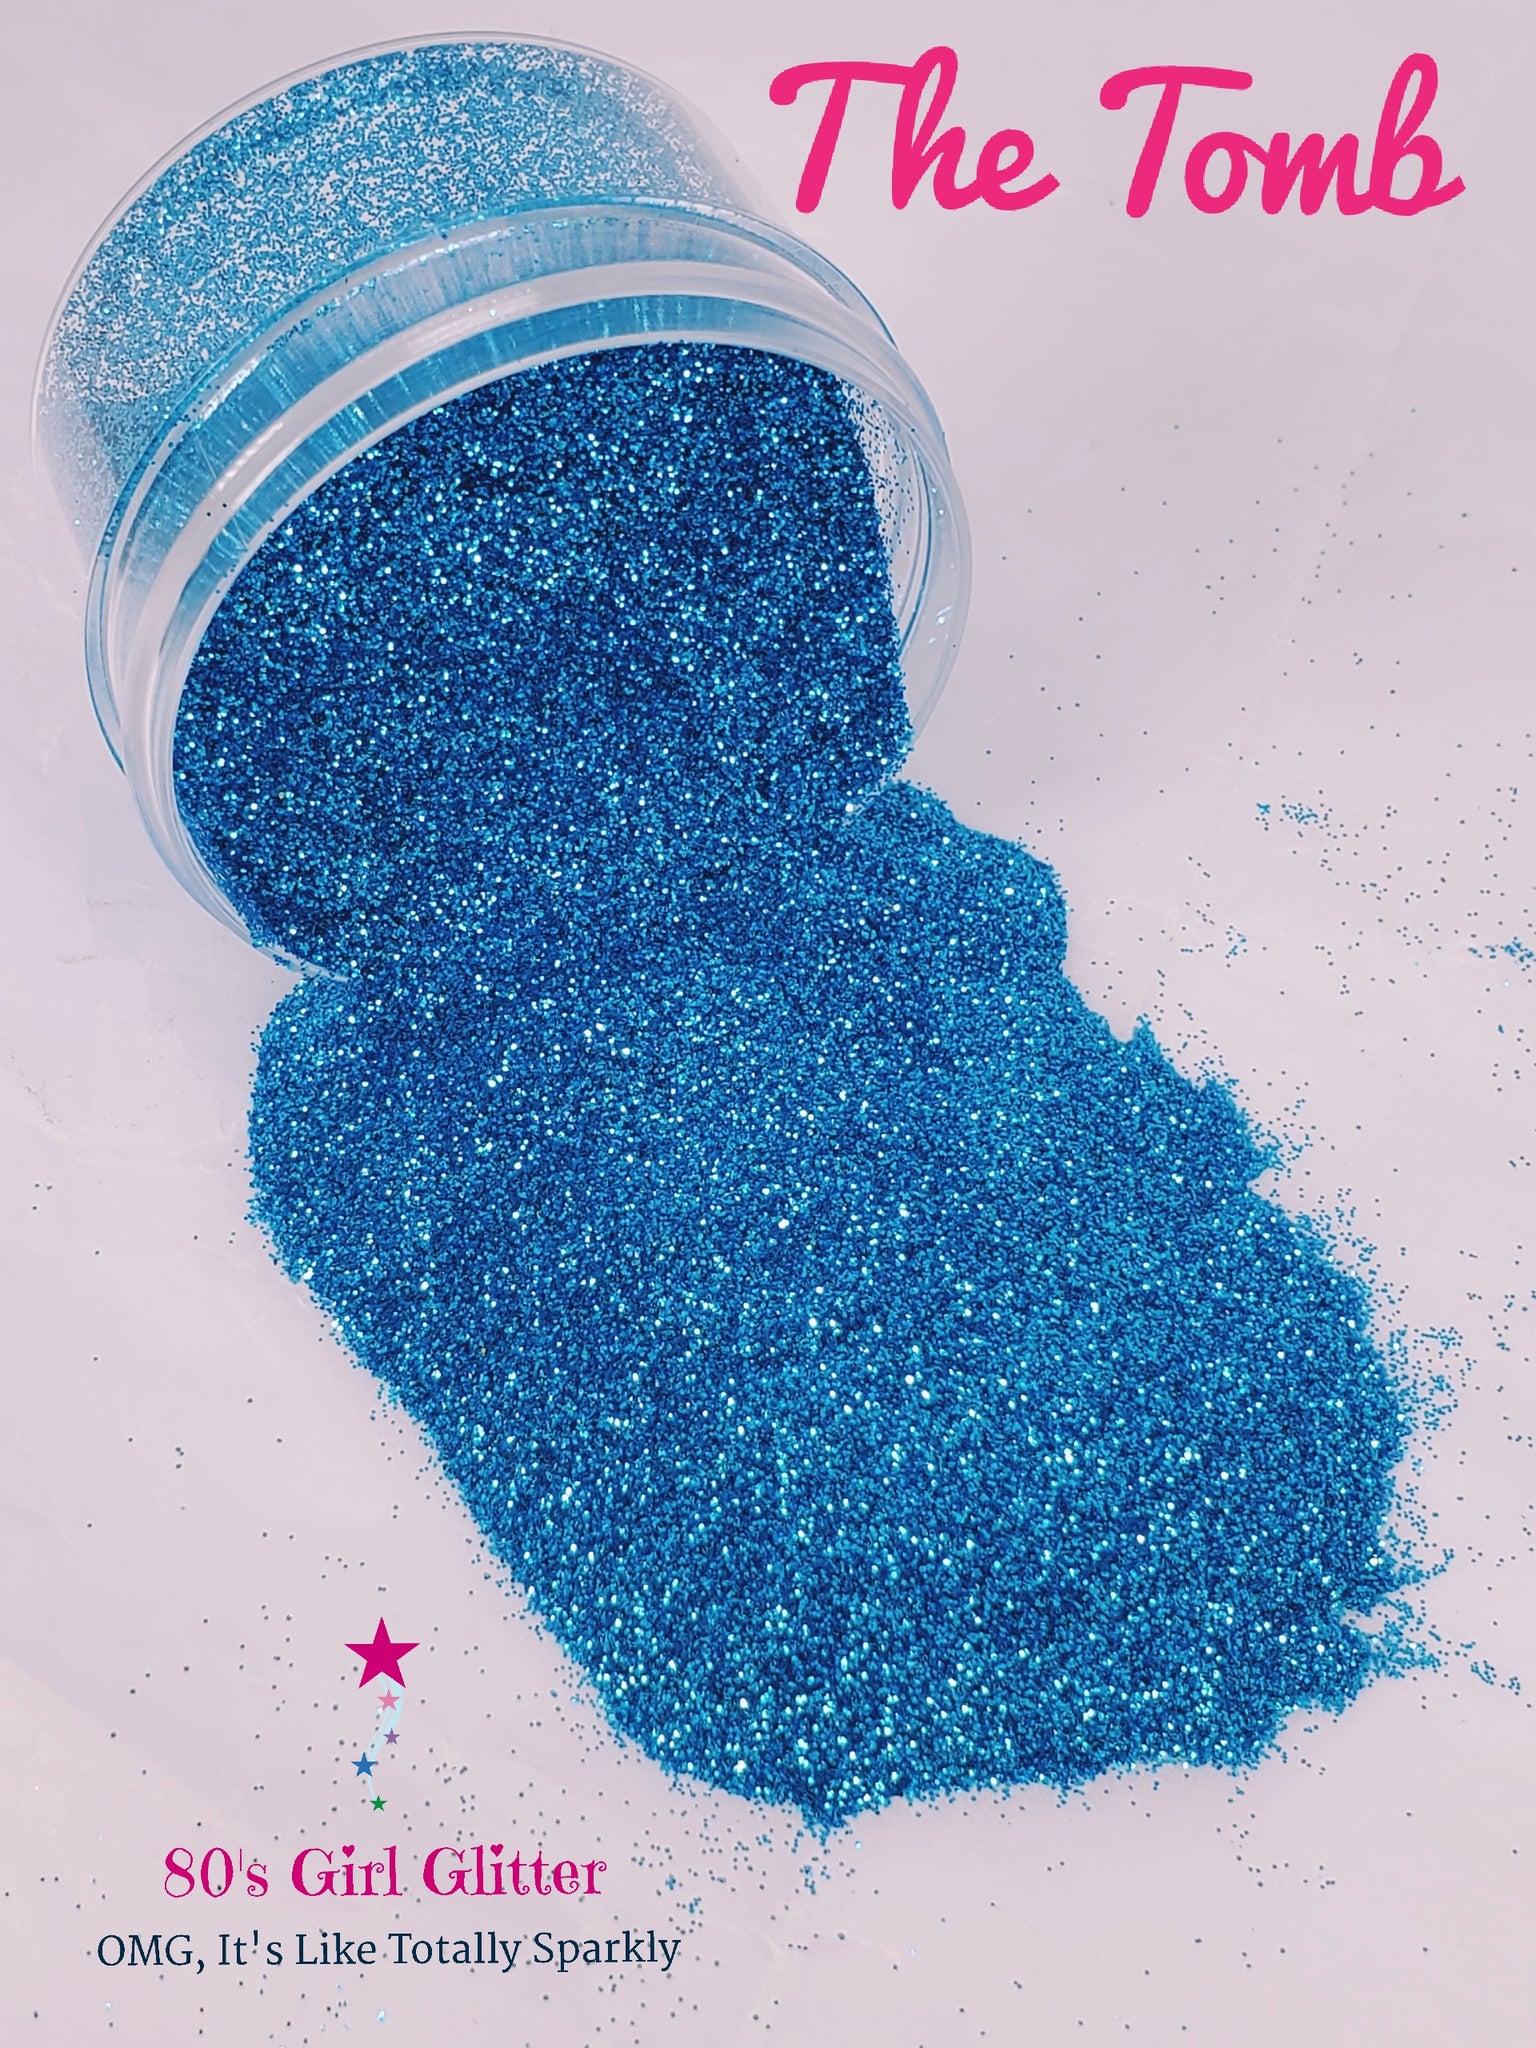 The Tomb - Glitter - Pacific Blue Ultra Fine Glitter - Tumbler Glitter - Glitter for Crafts